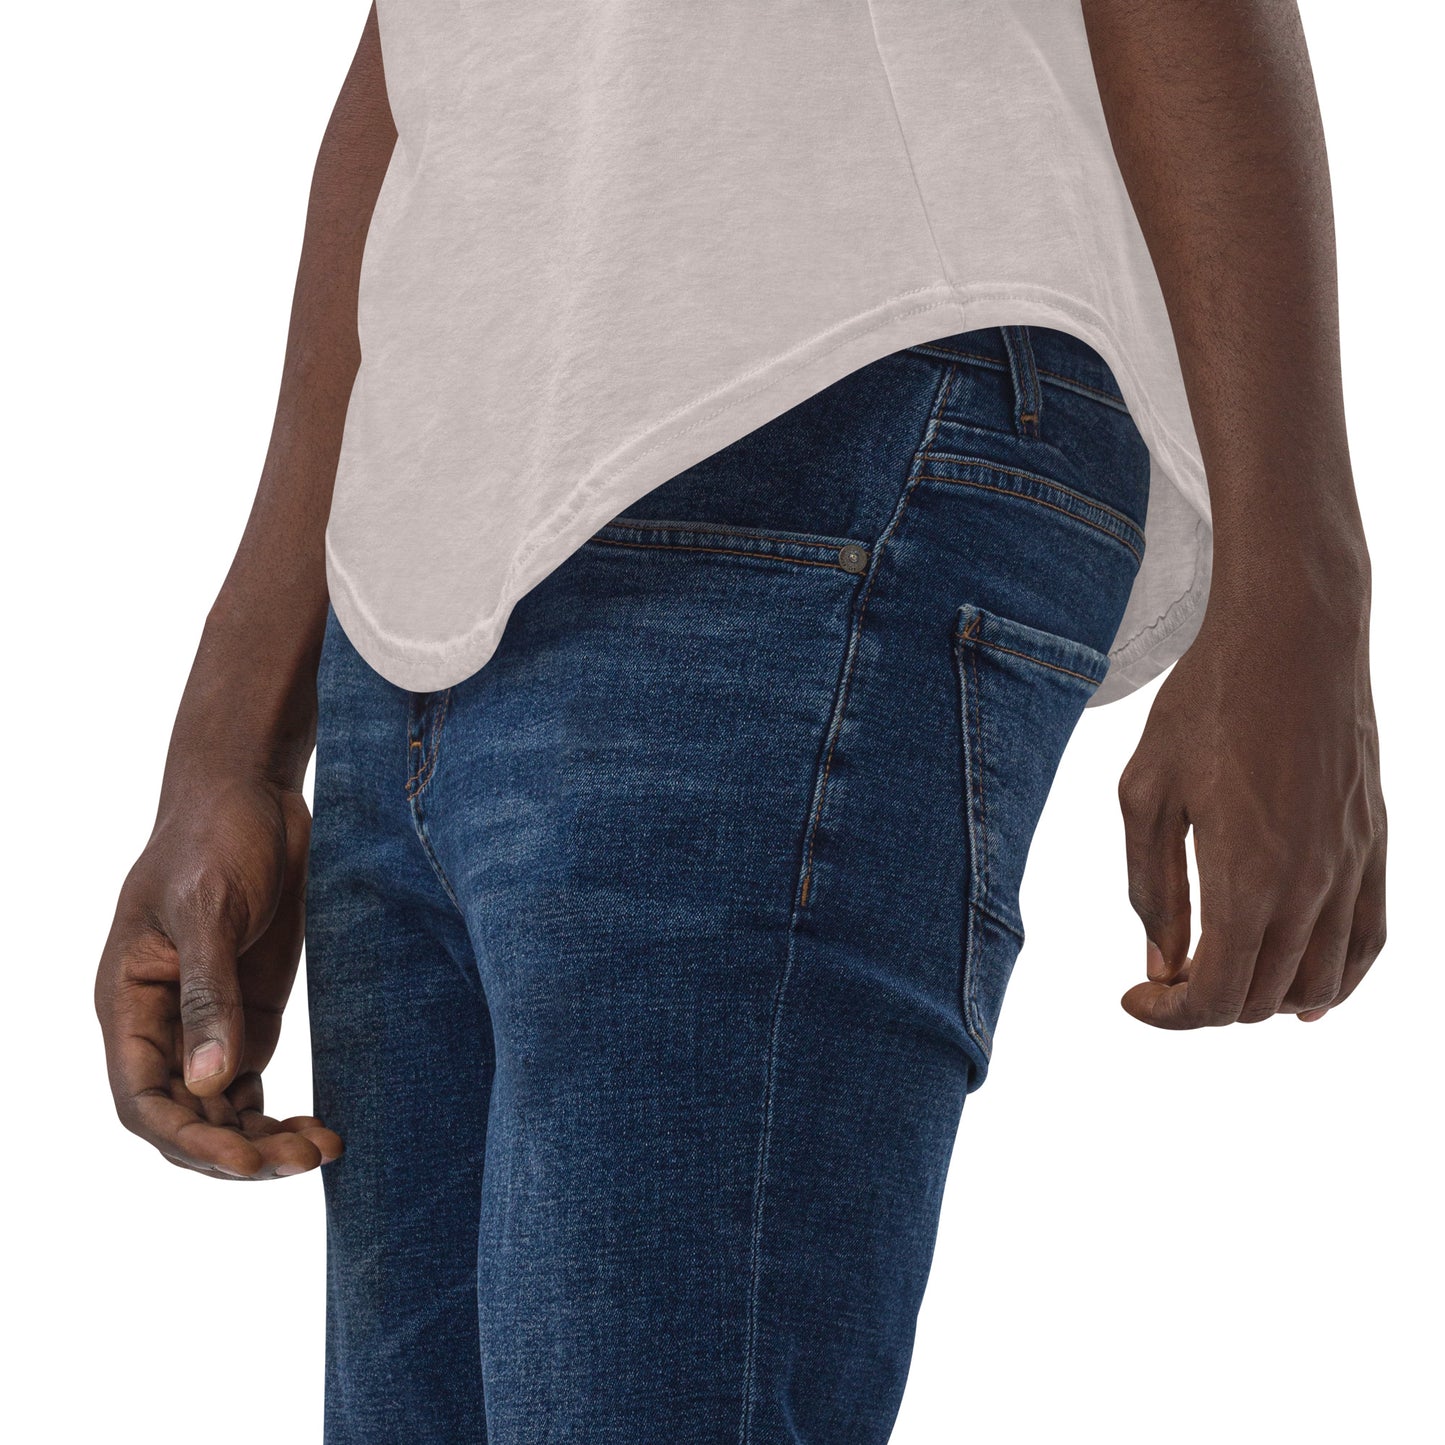 Sourdough and More Men's Curved Hem T-Shirt